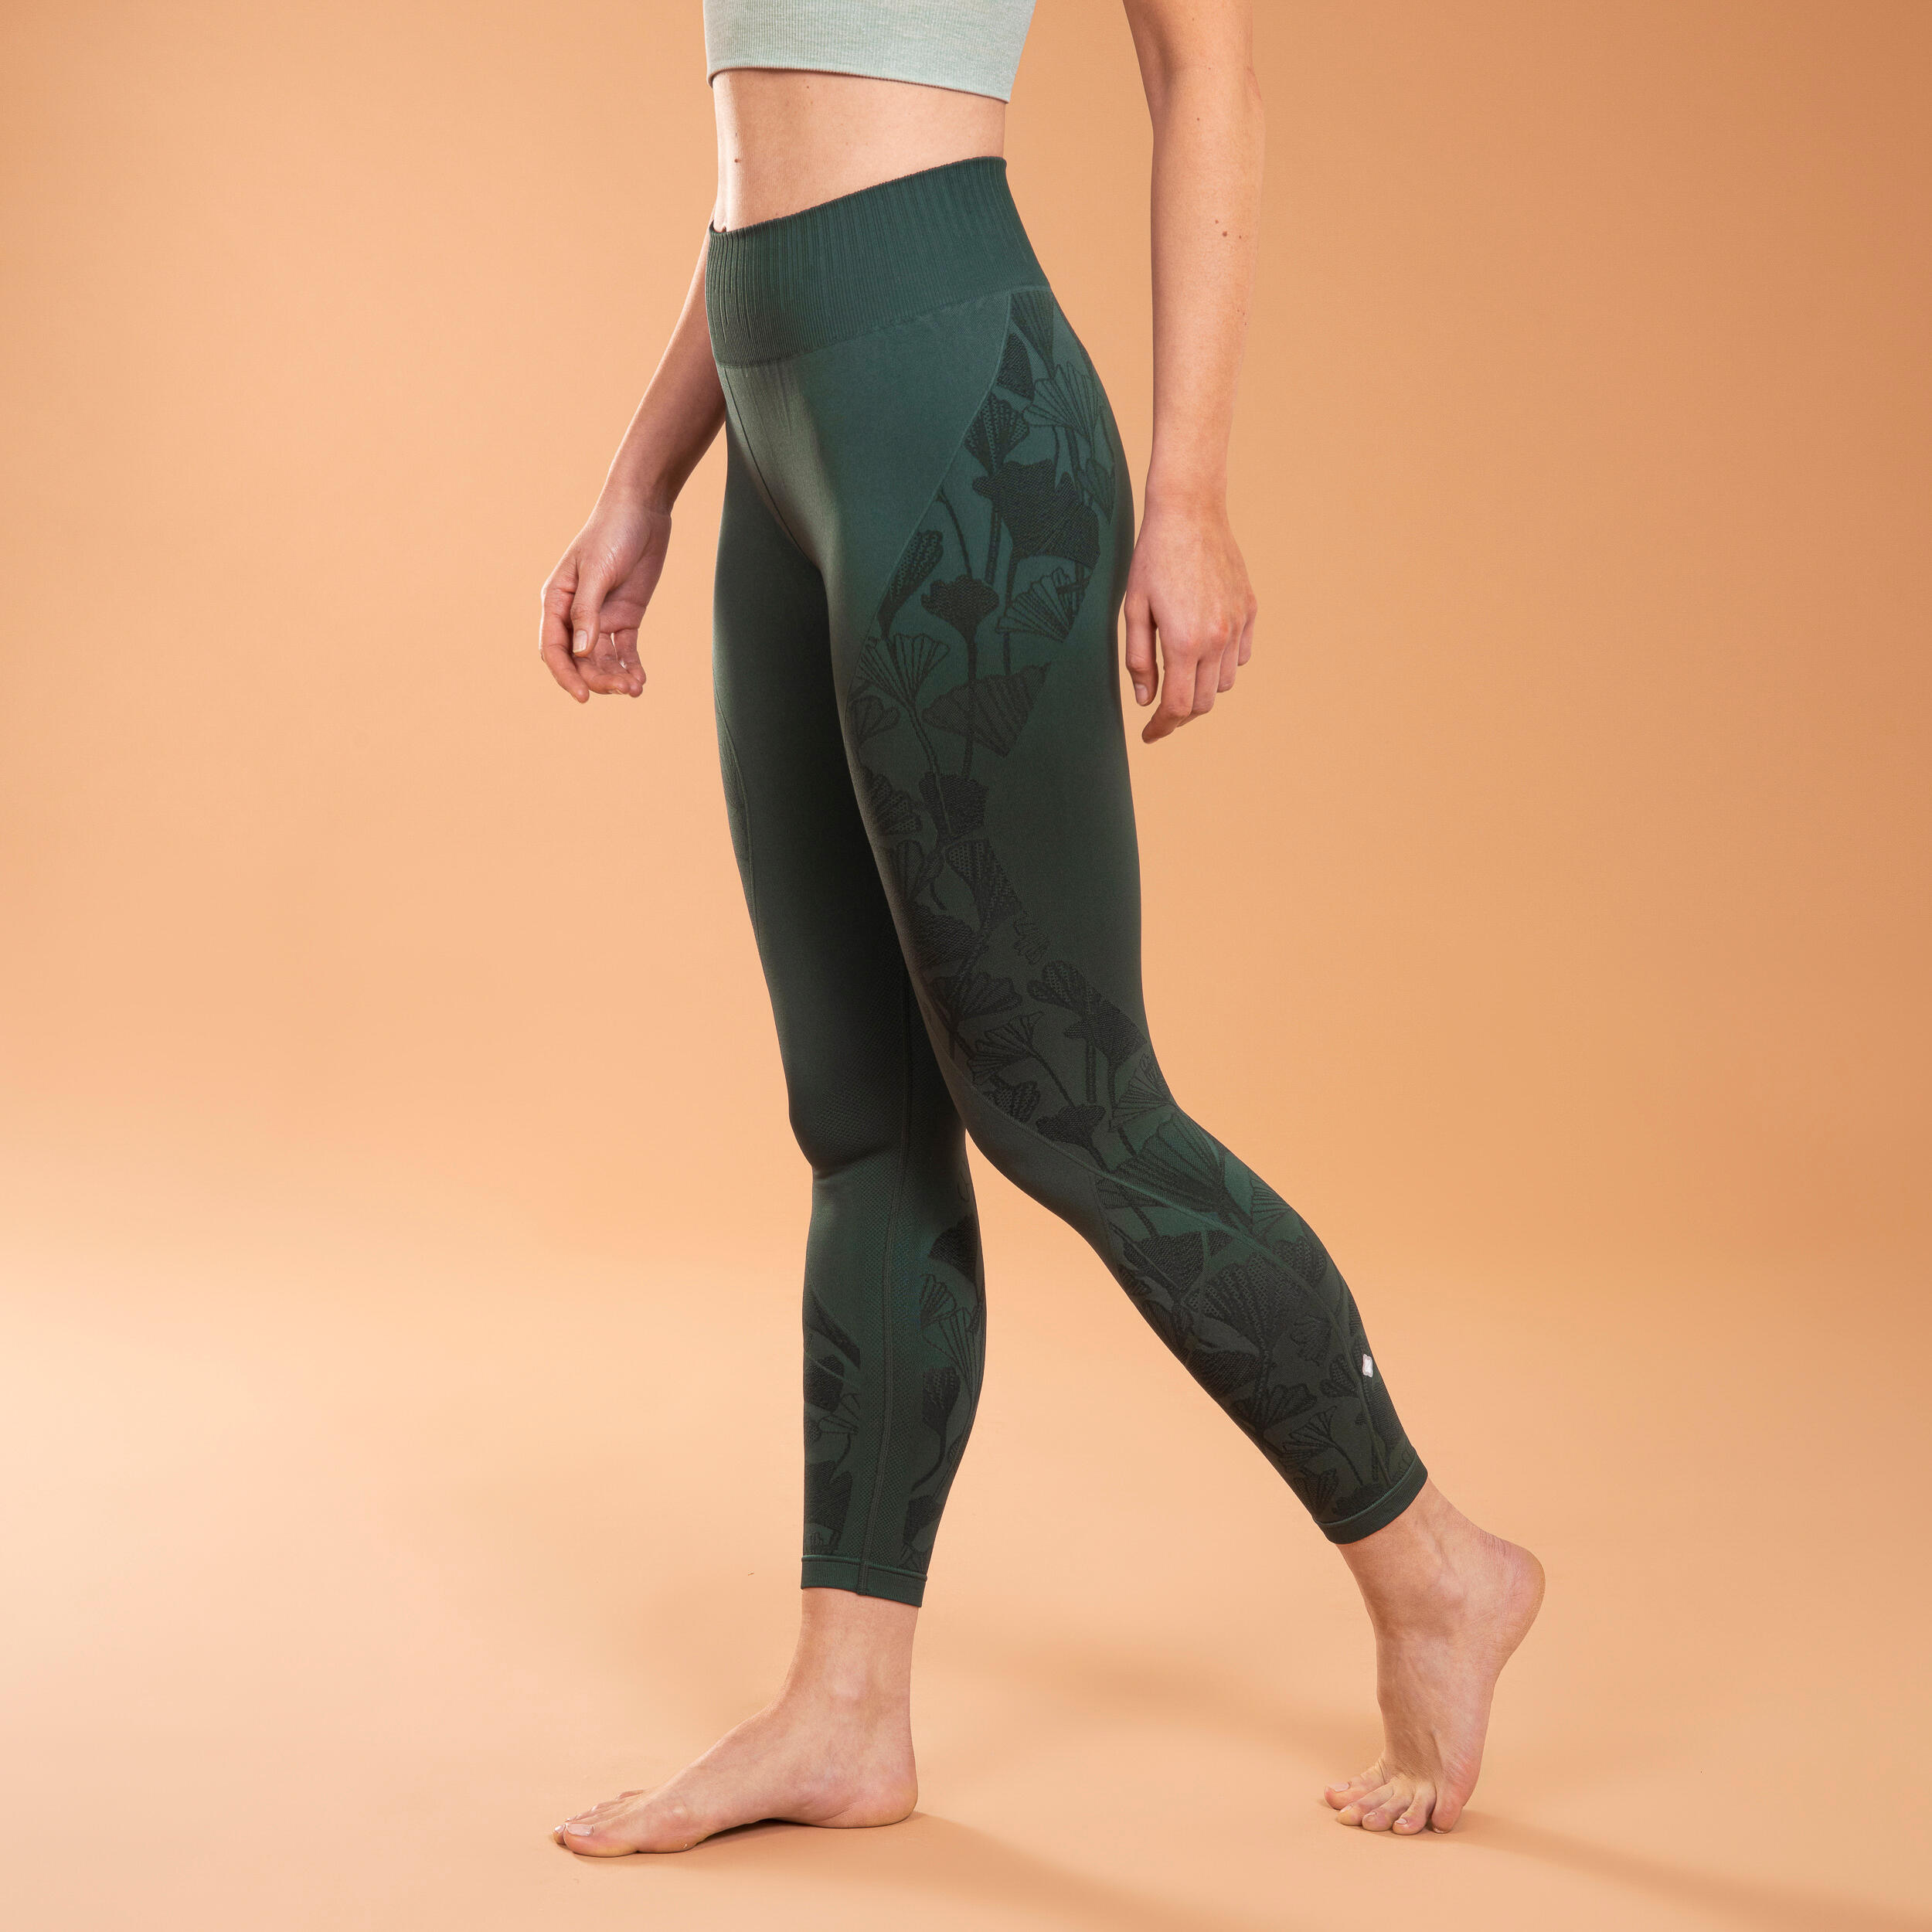 Sporty-style leggings - Dusty green - Ladies | H&M IN